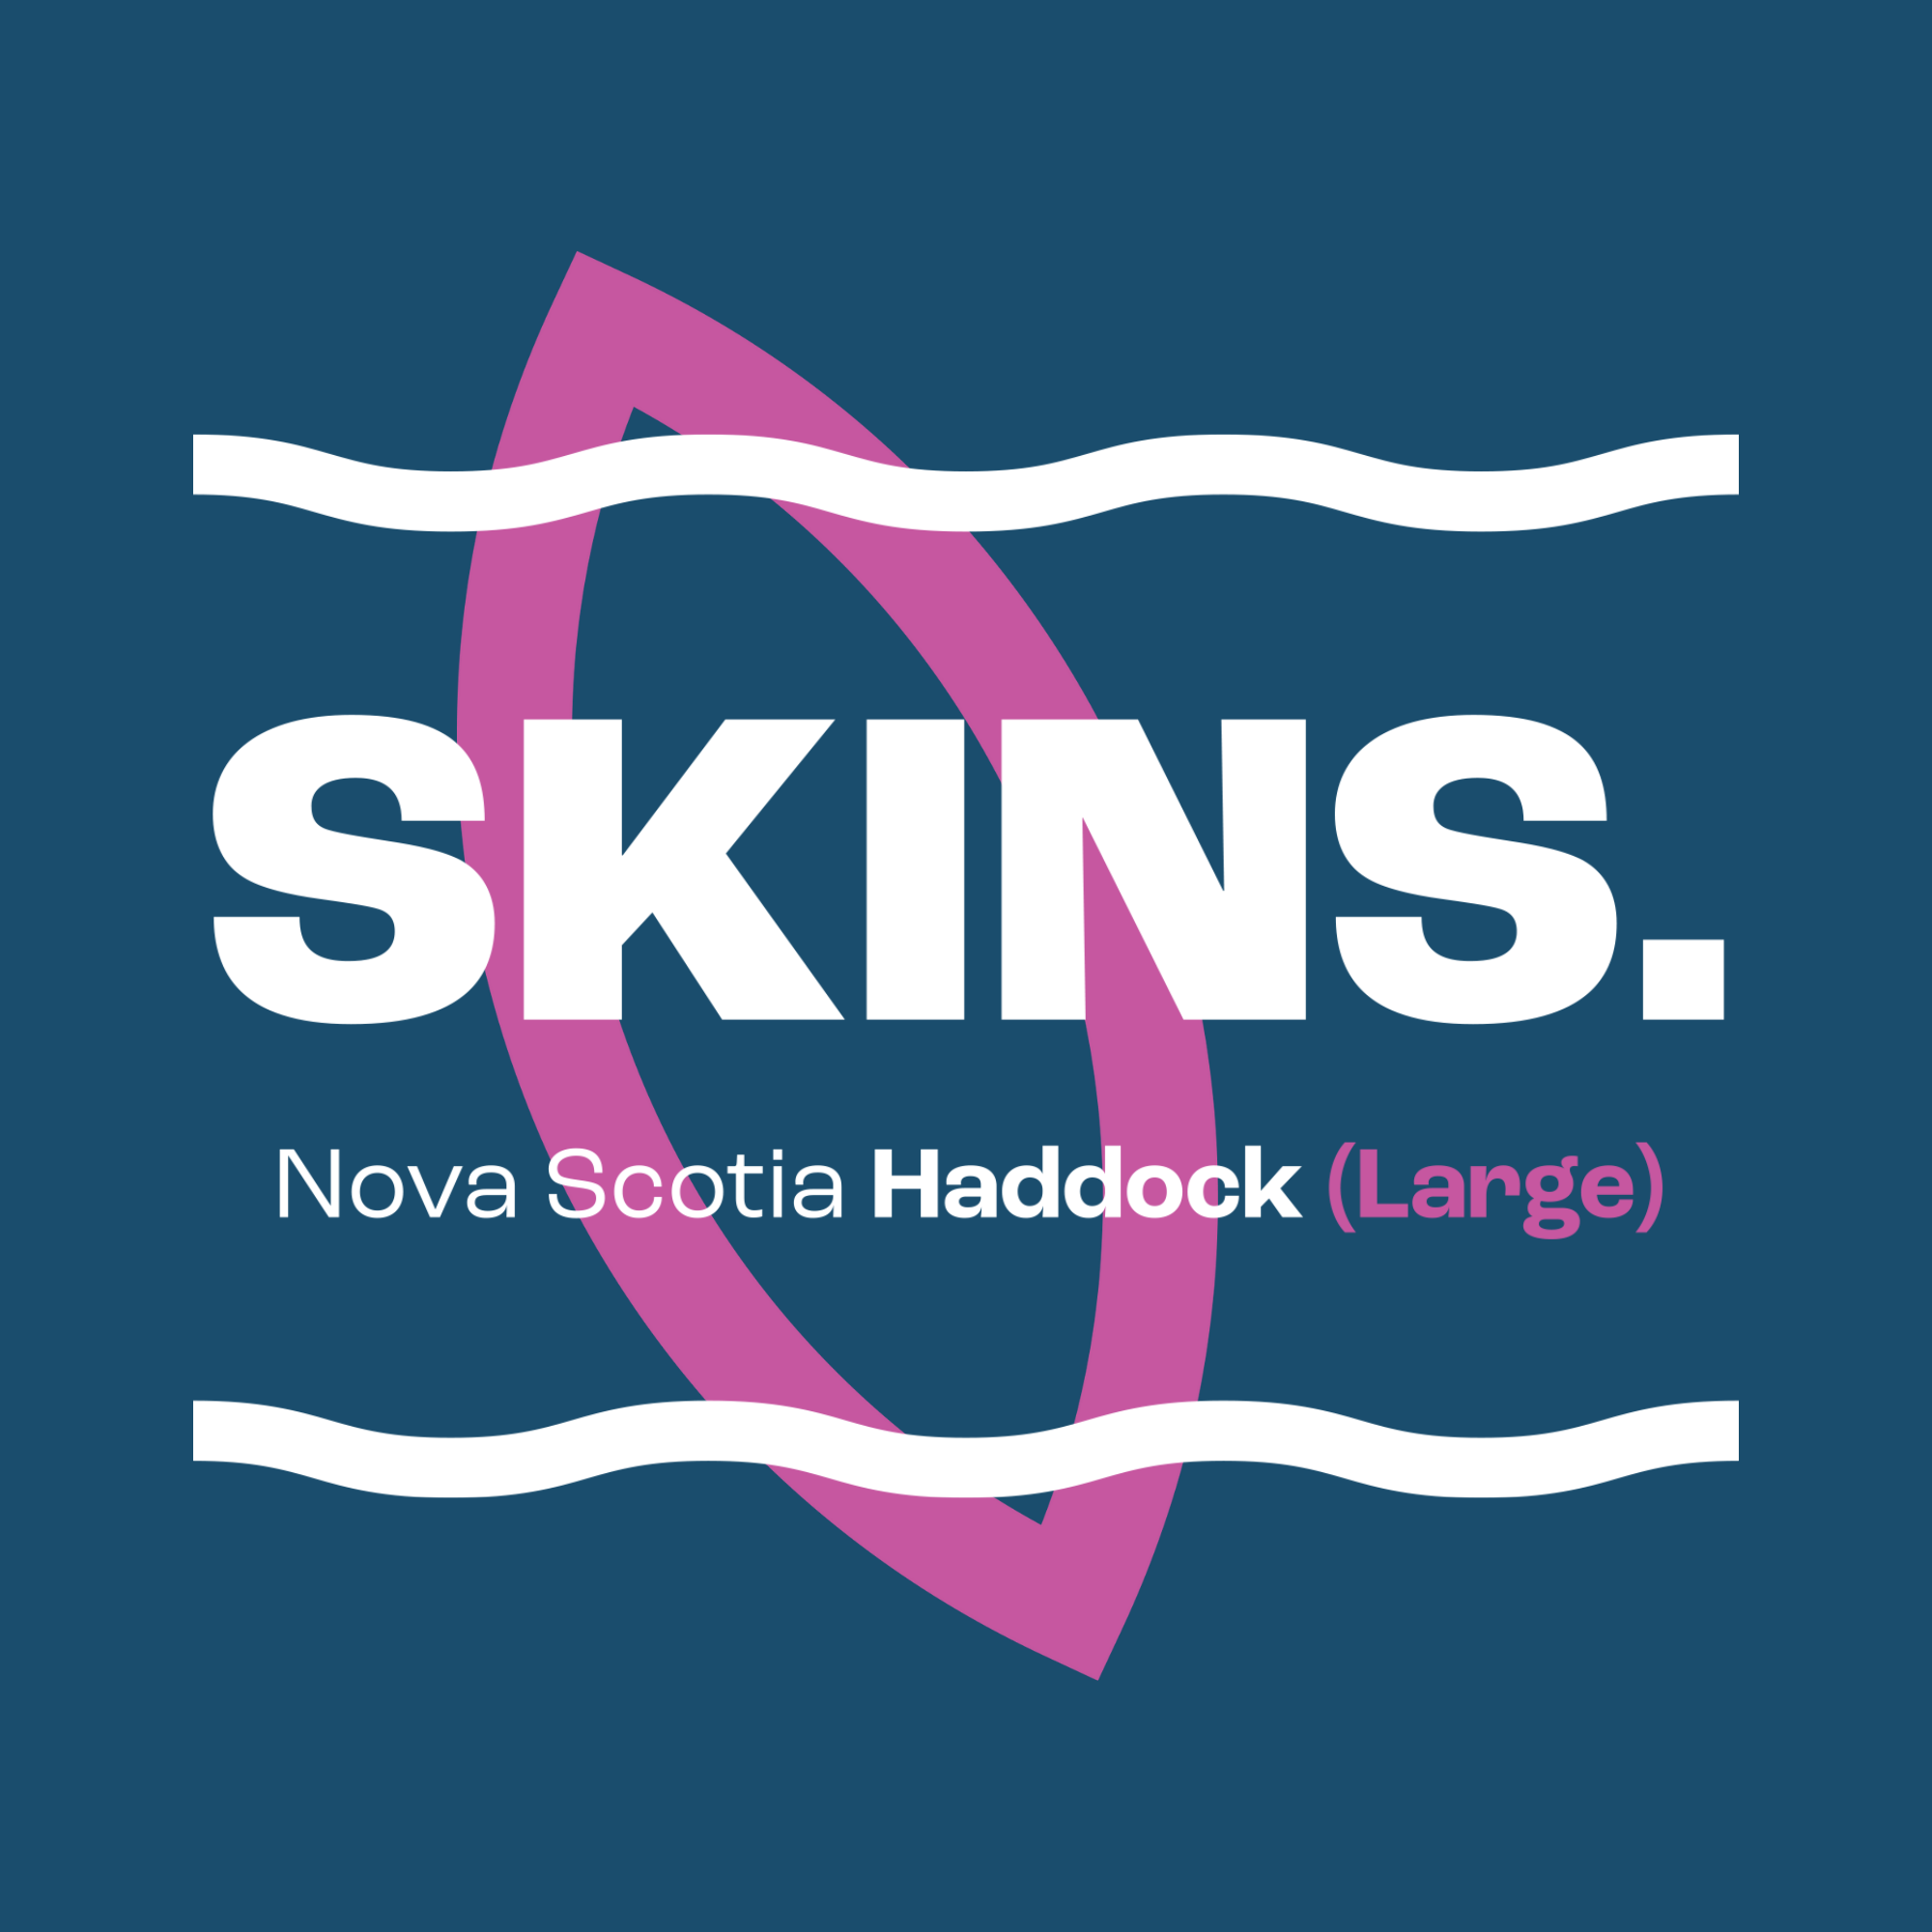 SKINS Nova Scotia Haddock (Large)